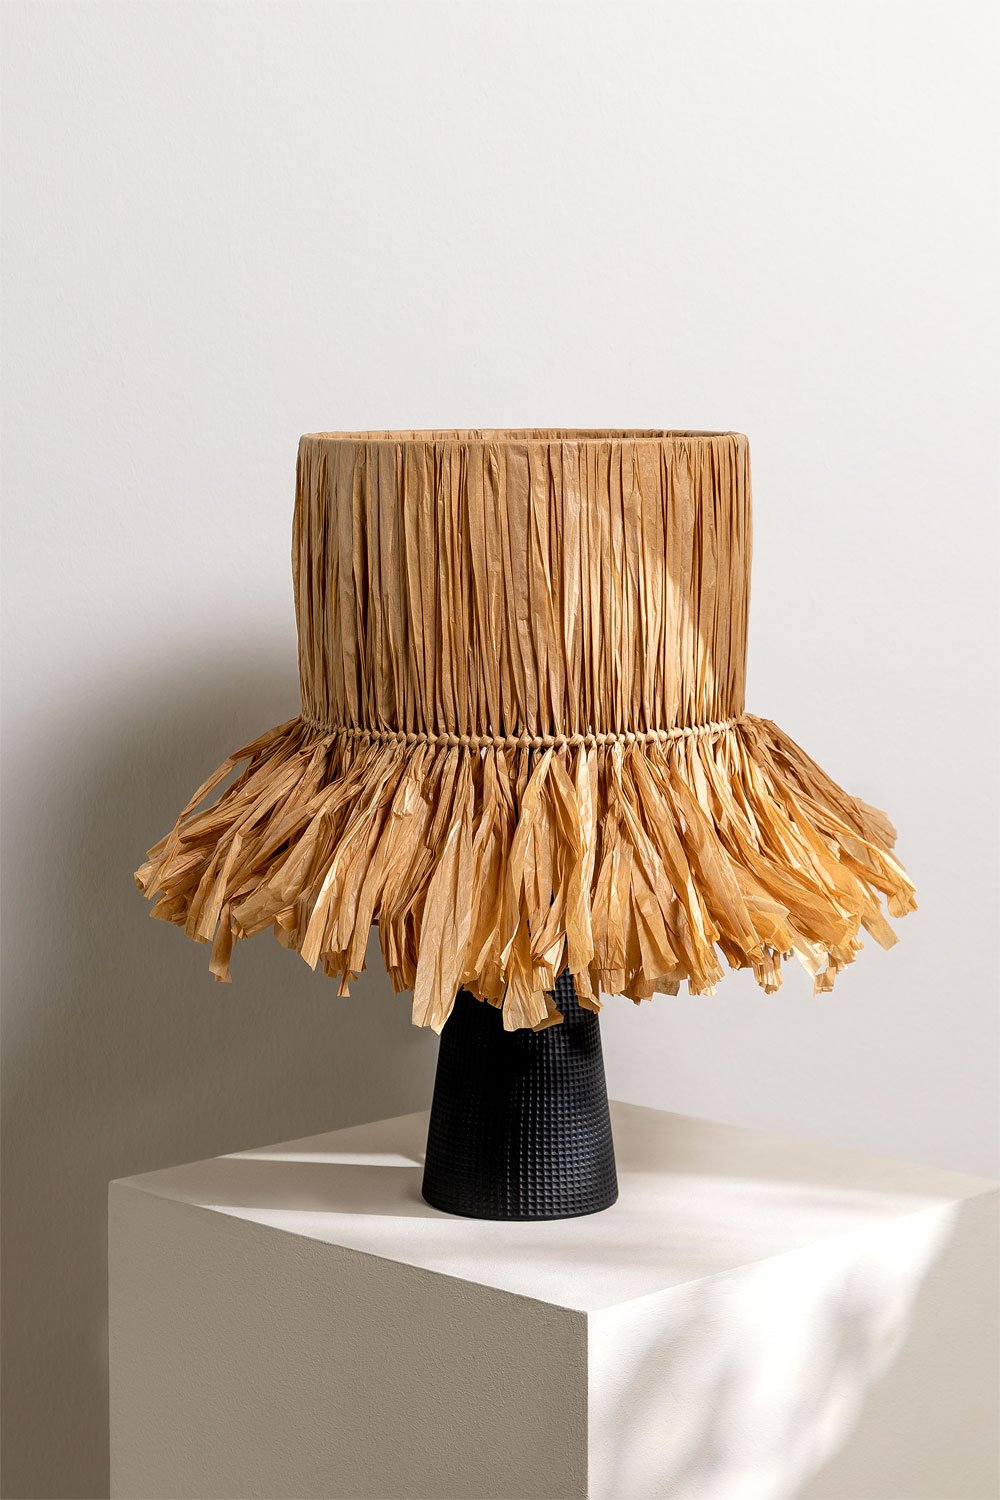 Keramische tafellamp Yataity , galerij beeld 1